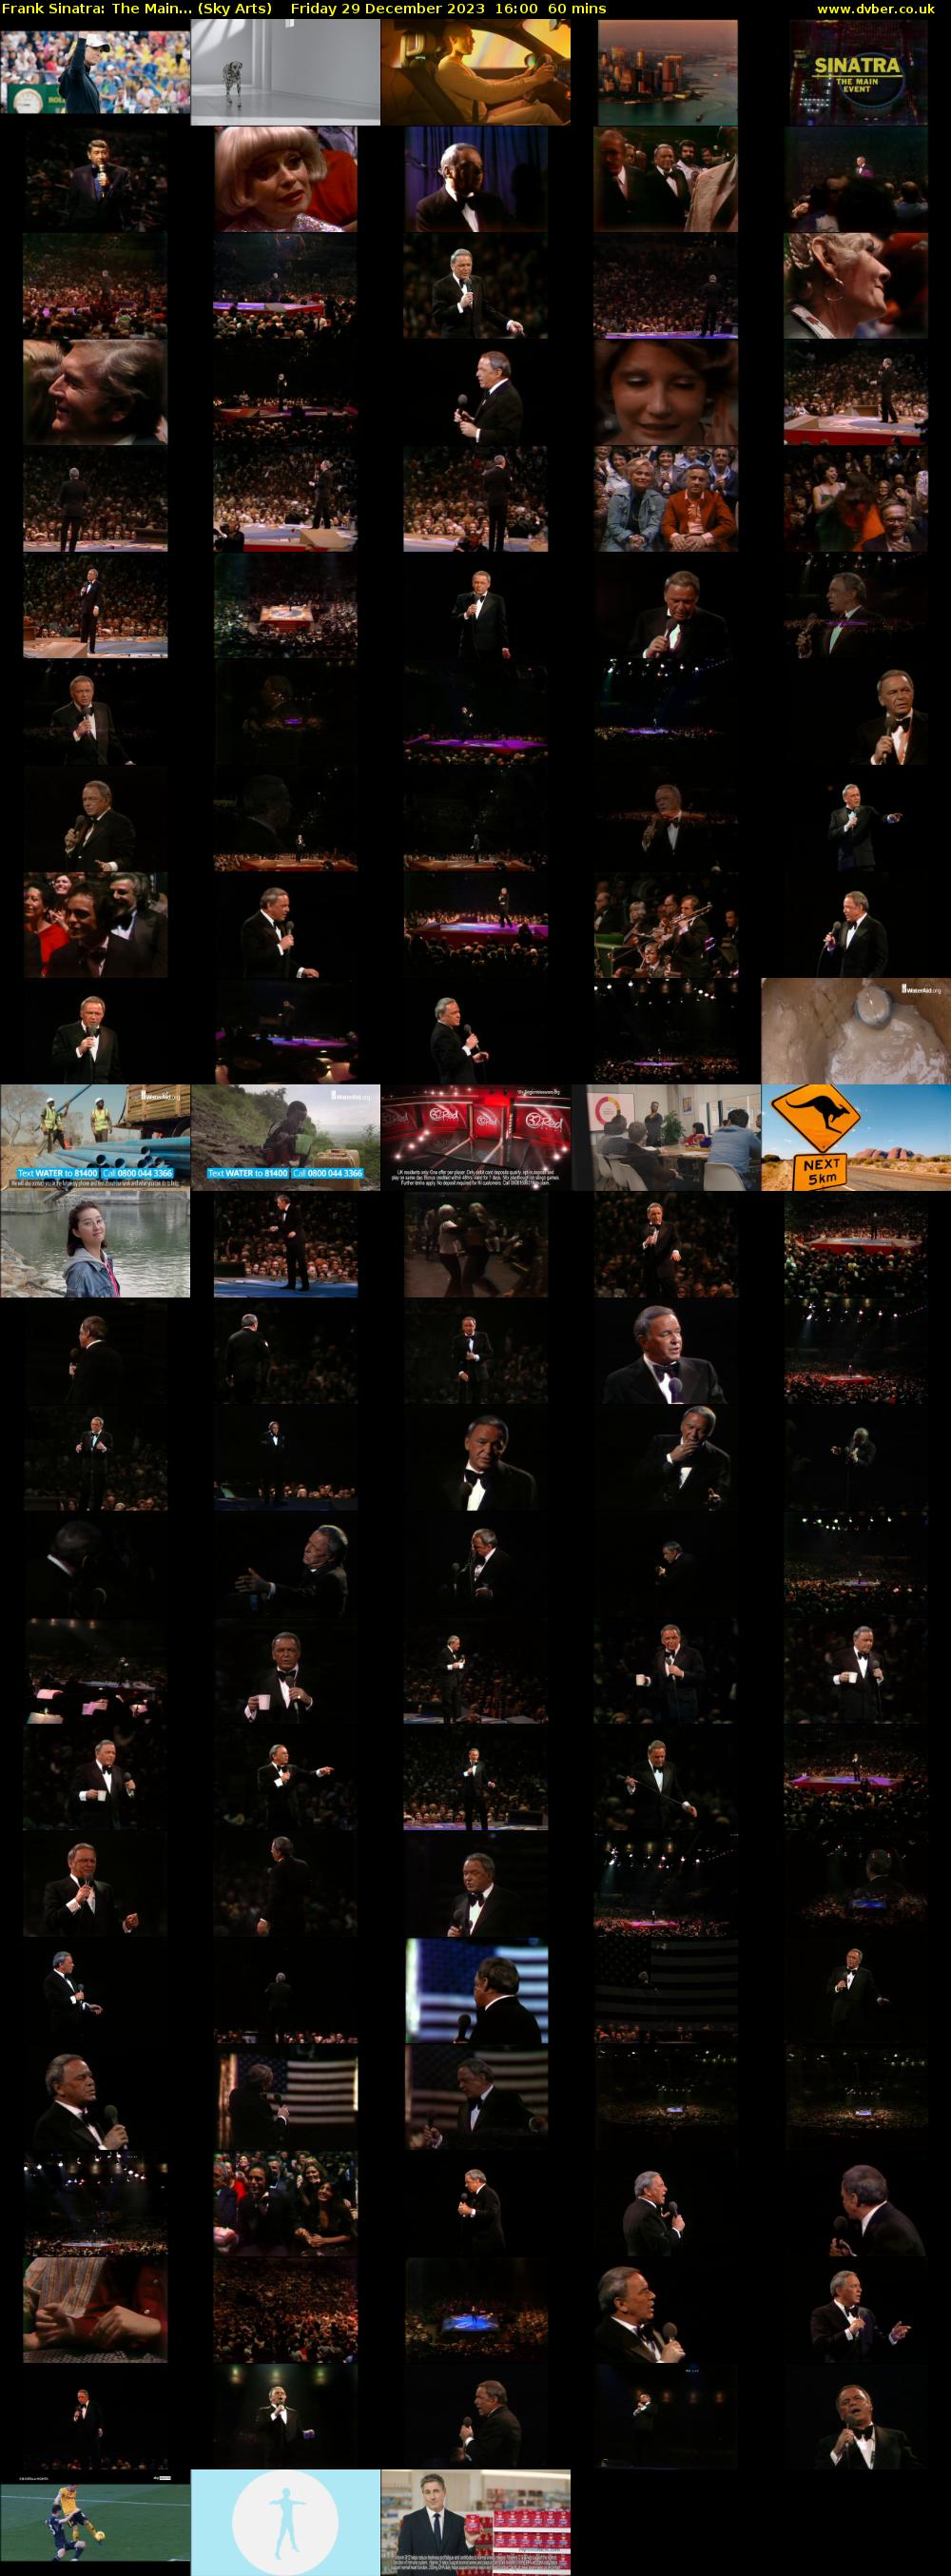 Frank Sinatra: The Main... (Sky Arts) Friday 29 December 2023 16:00 - 17:00